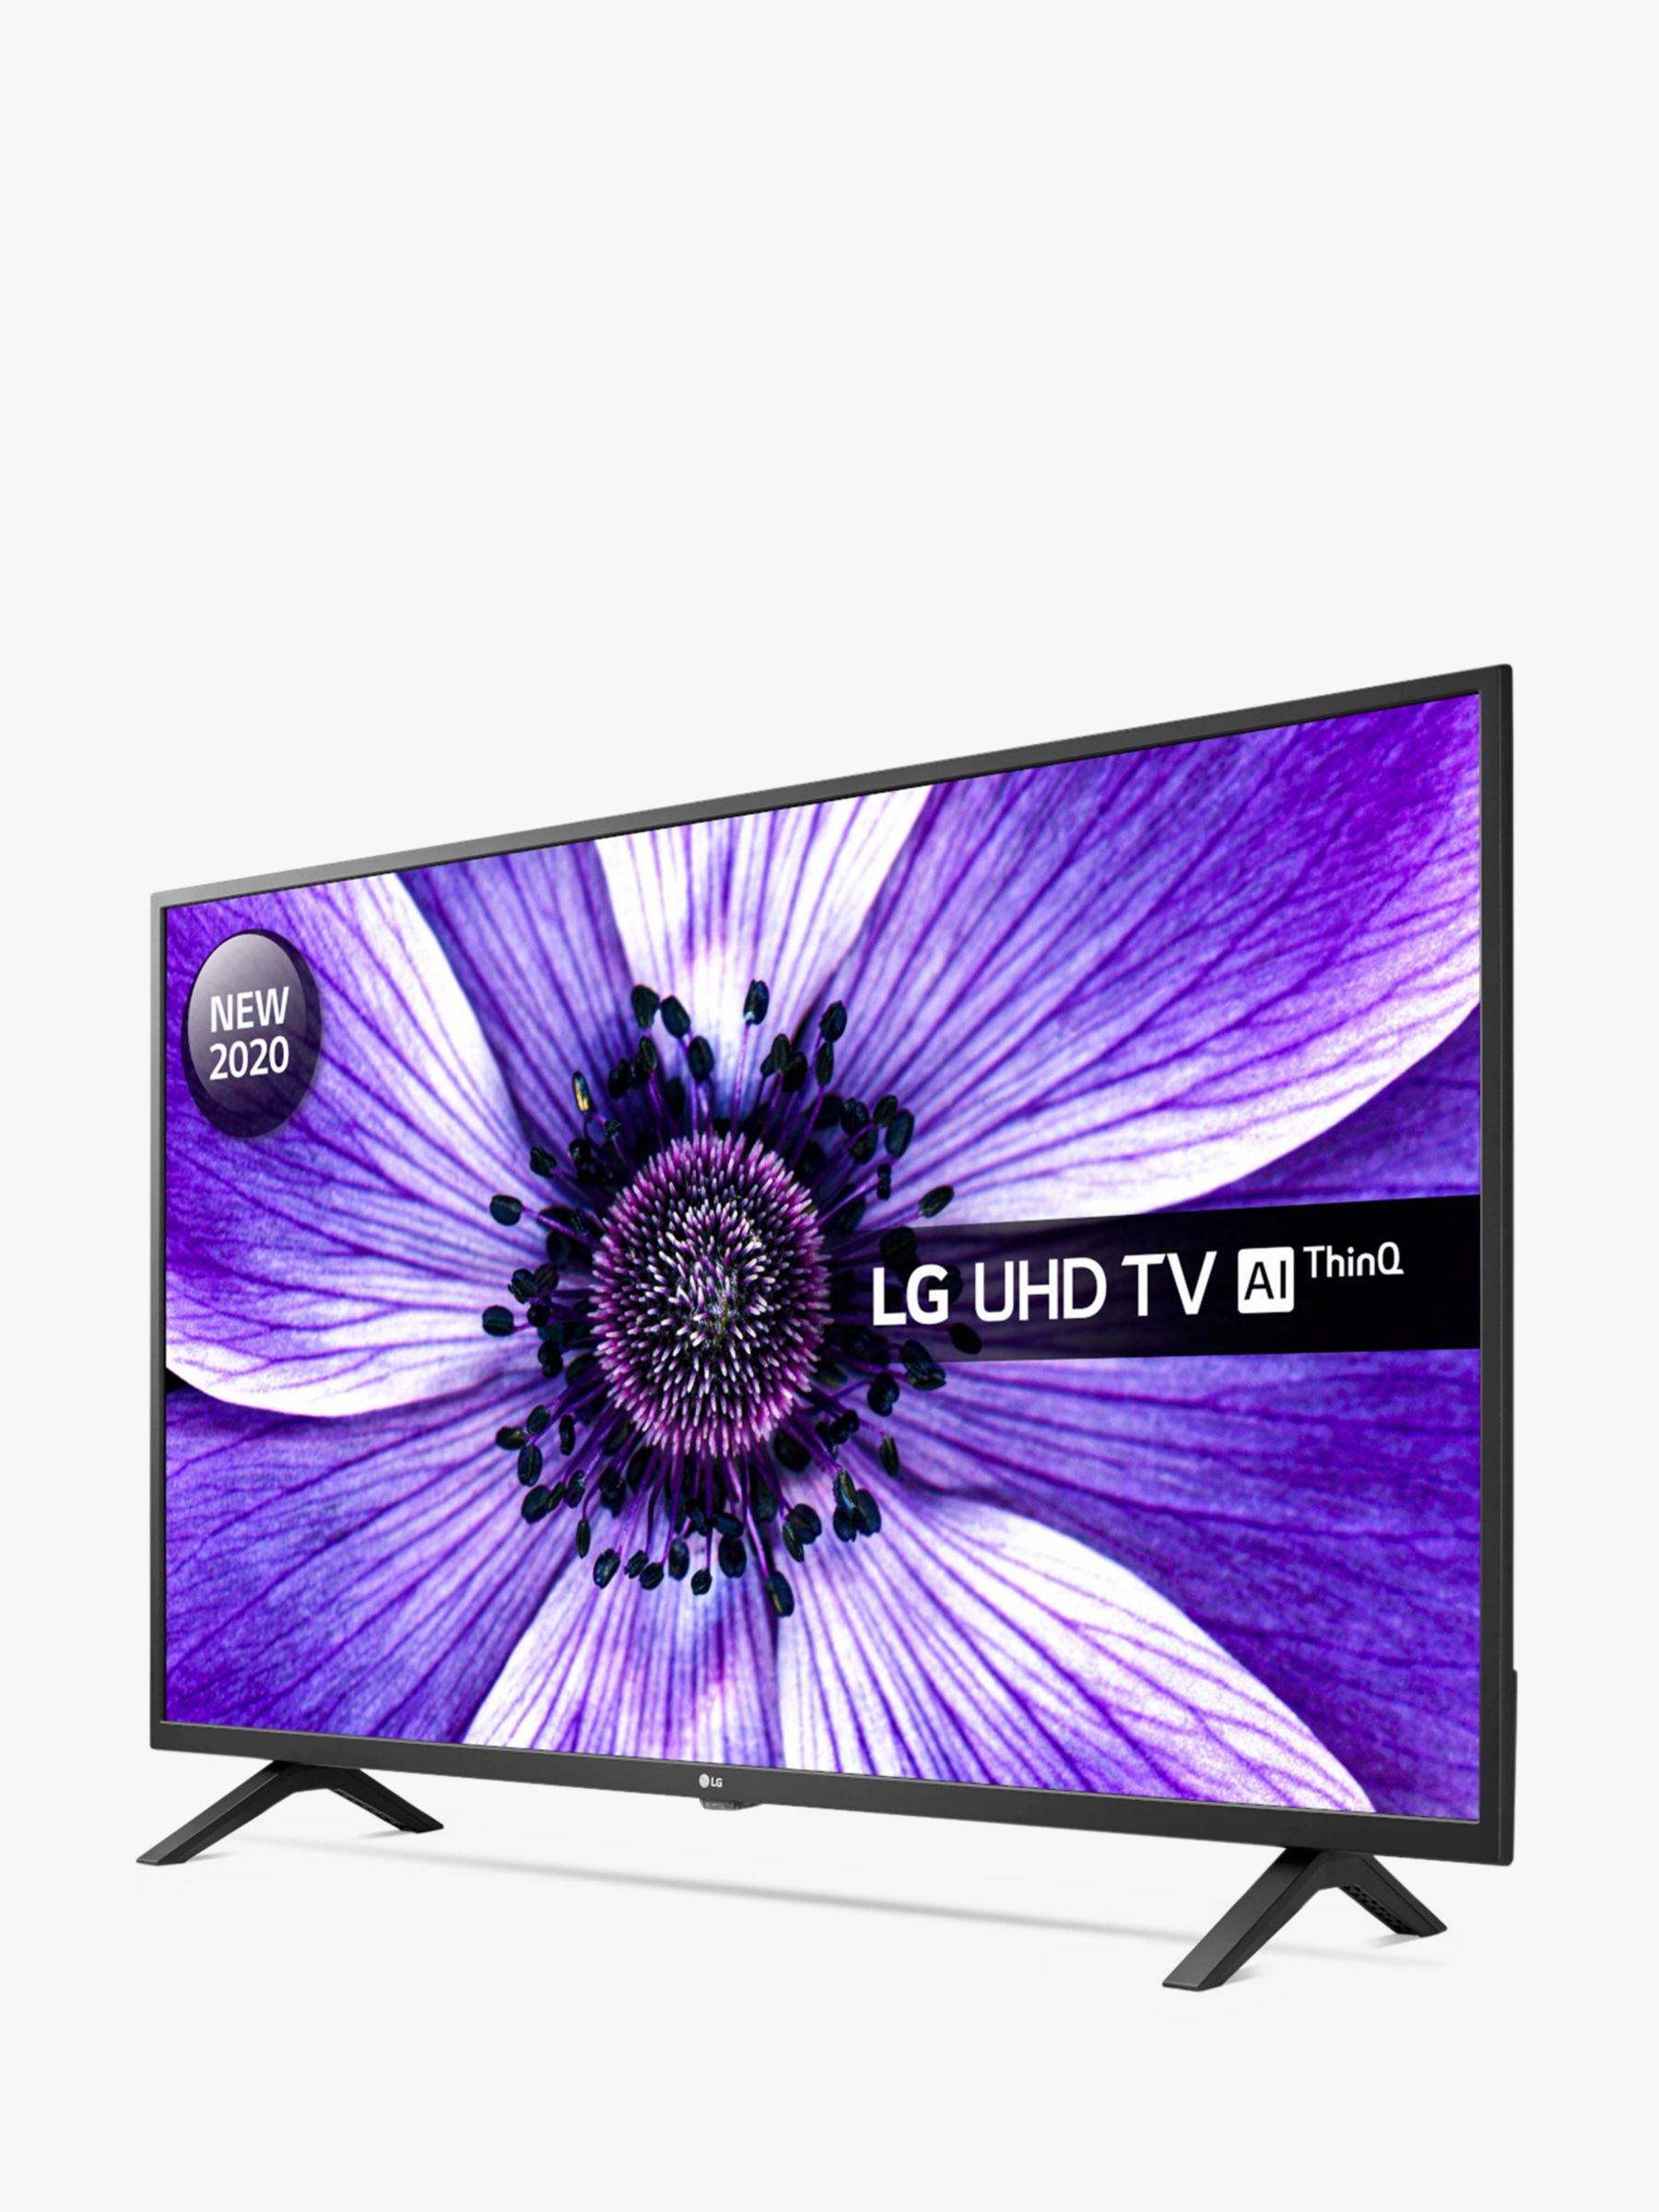 LG 55UN70006LA (2020) LED HDR 4K Ultra HD Smart TV, 55 inch with Freeview HD/Freesat HD, Black ...